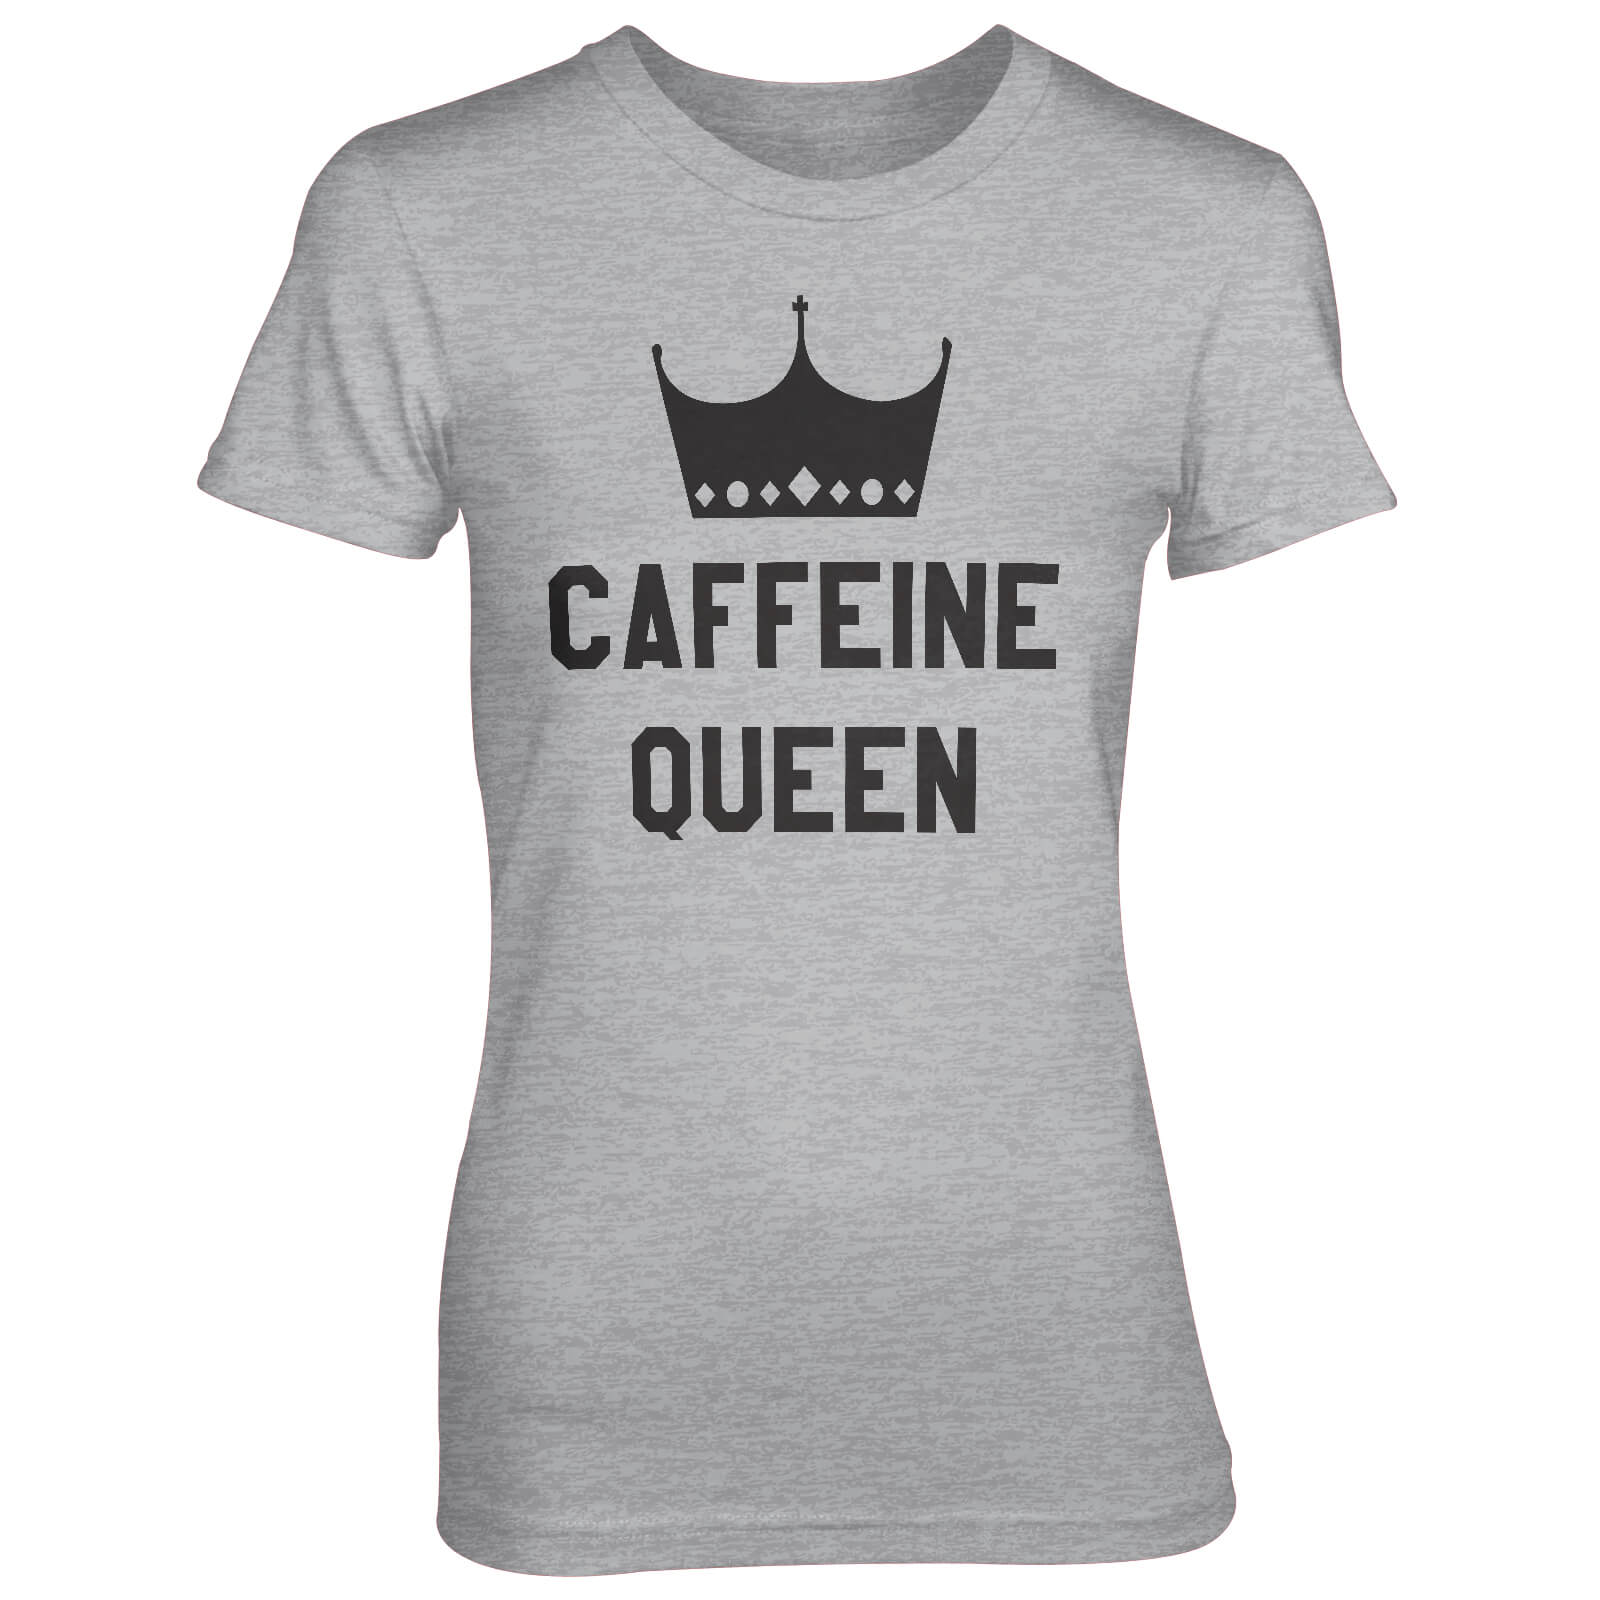 Caffeine Queen Women's Grey T-Shirt - S - Grey